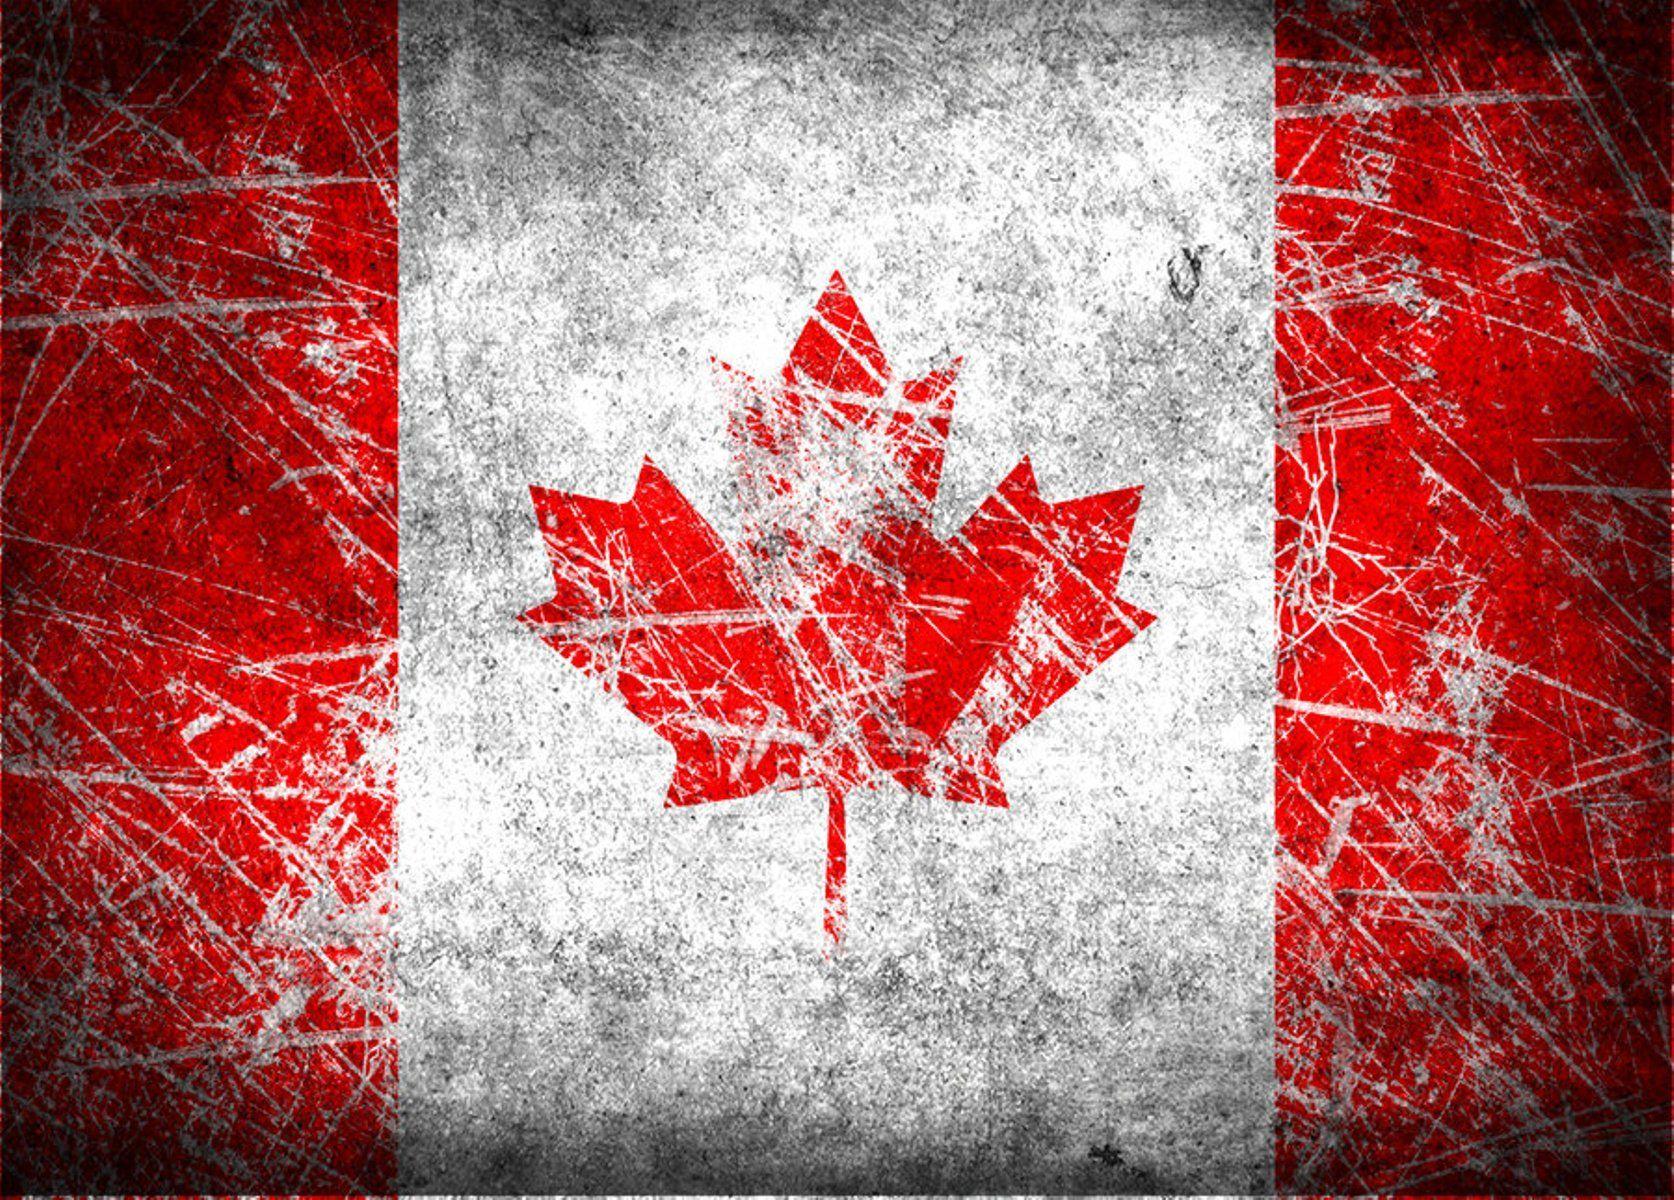 canadian flag ipad wallpaper